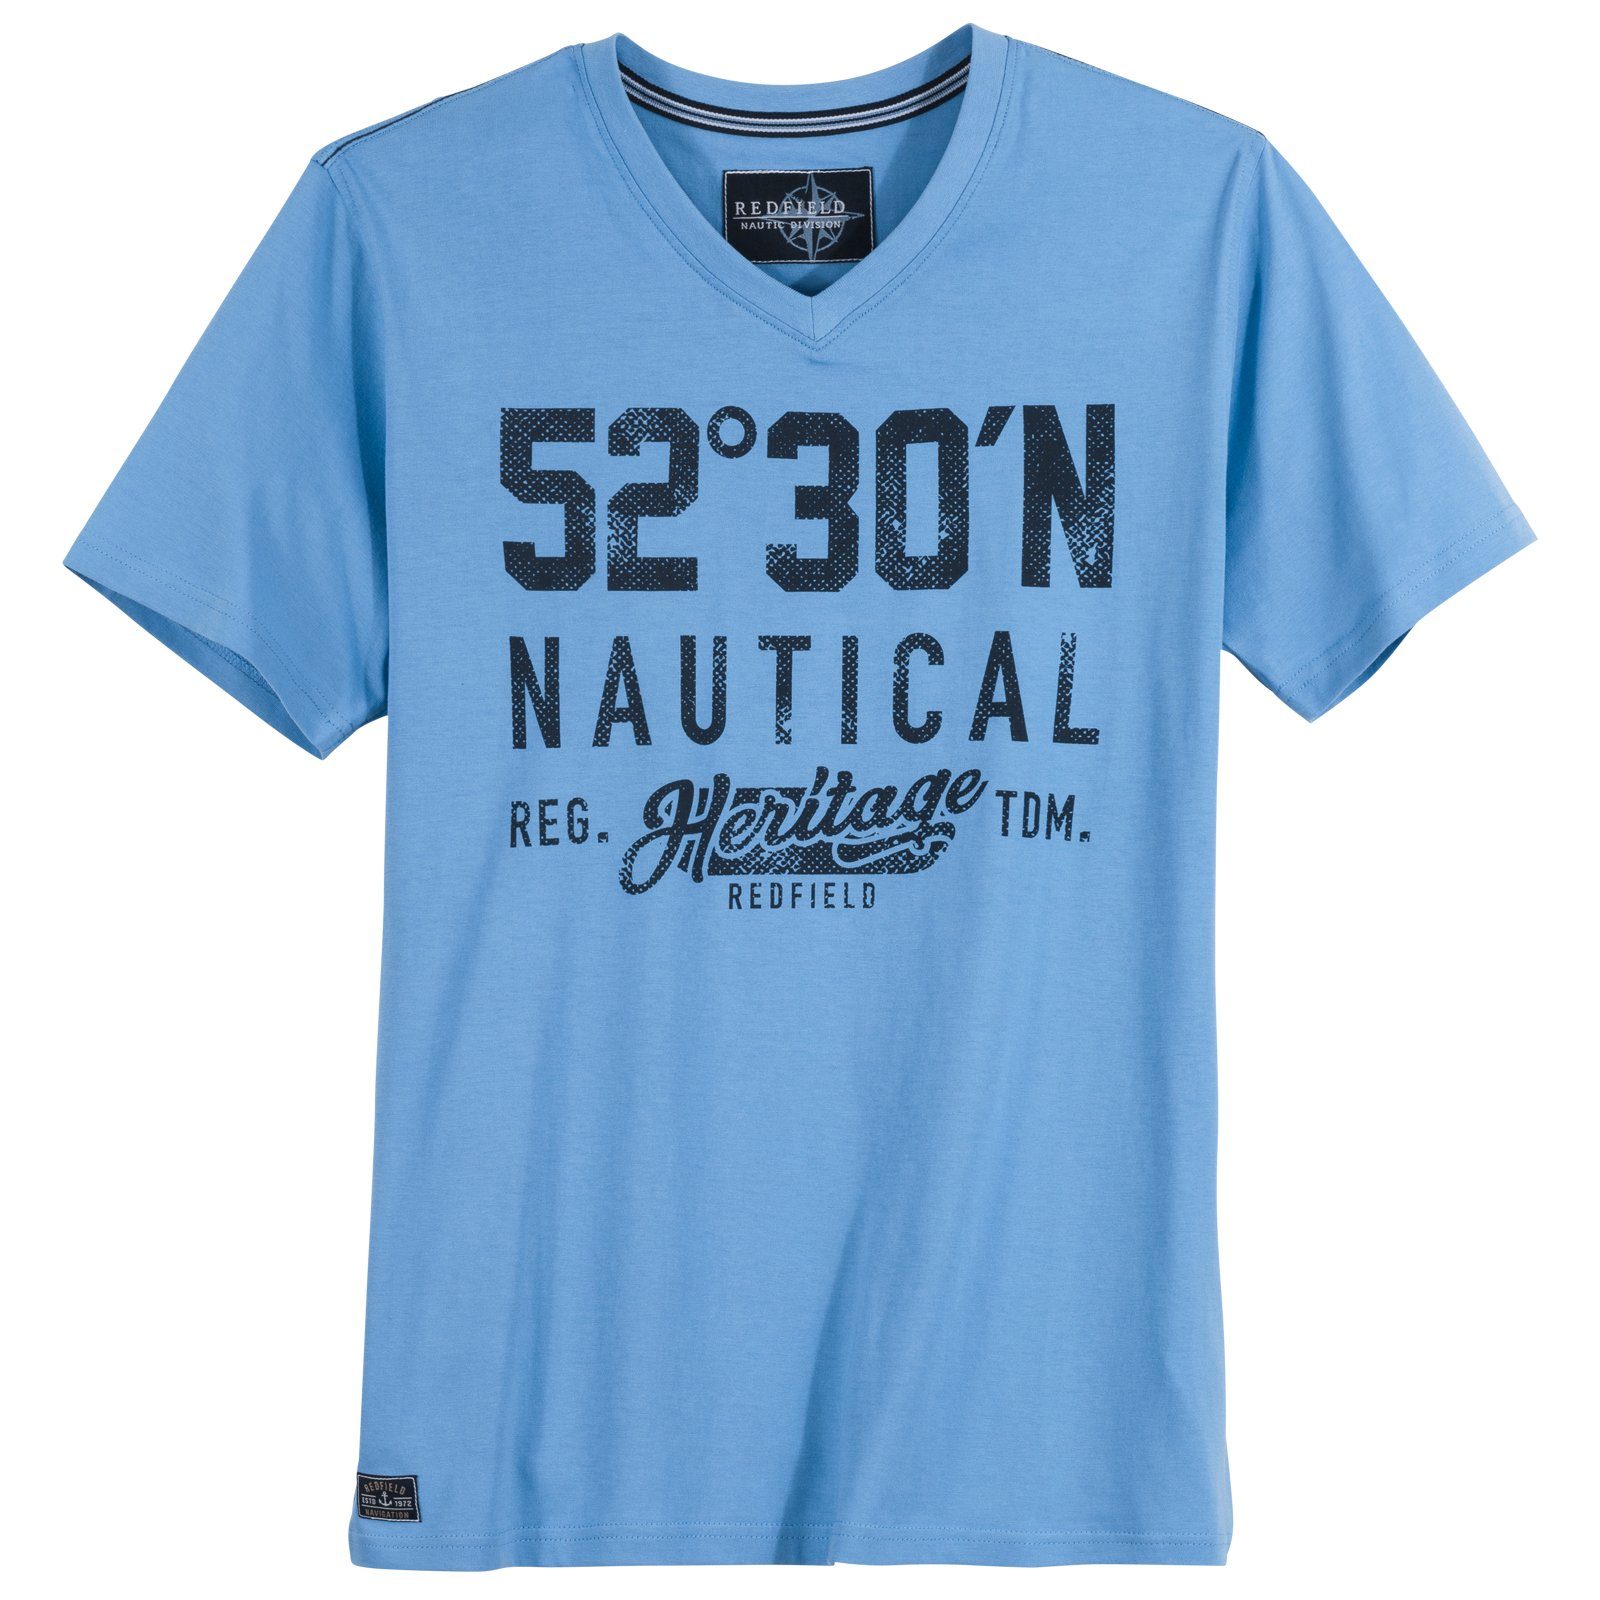 52°30'N Übergrößen Redfield himmelblau Print-Shirt redfield T-Shirt Herren V-Neck